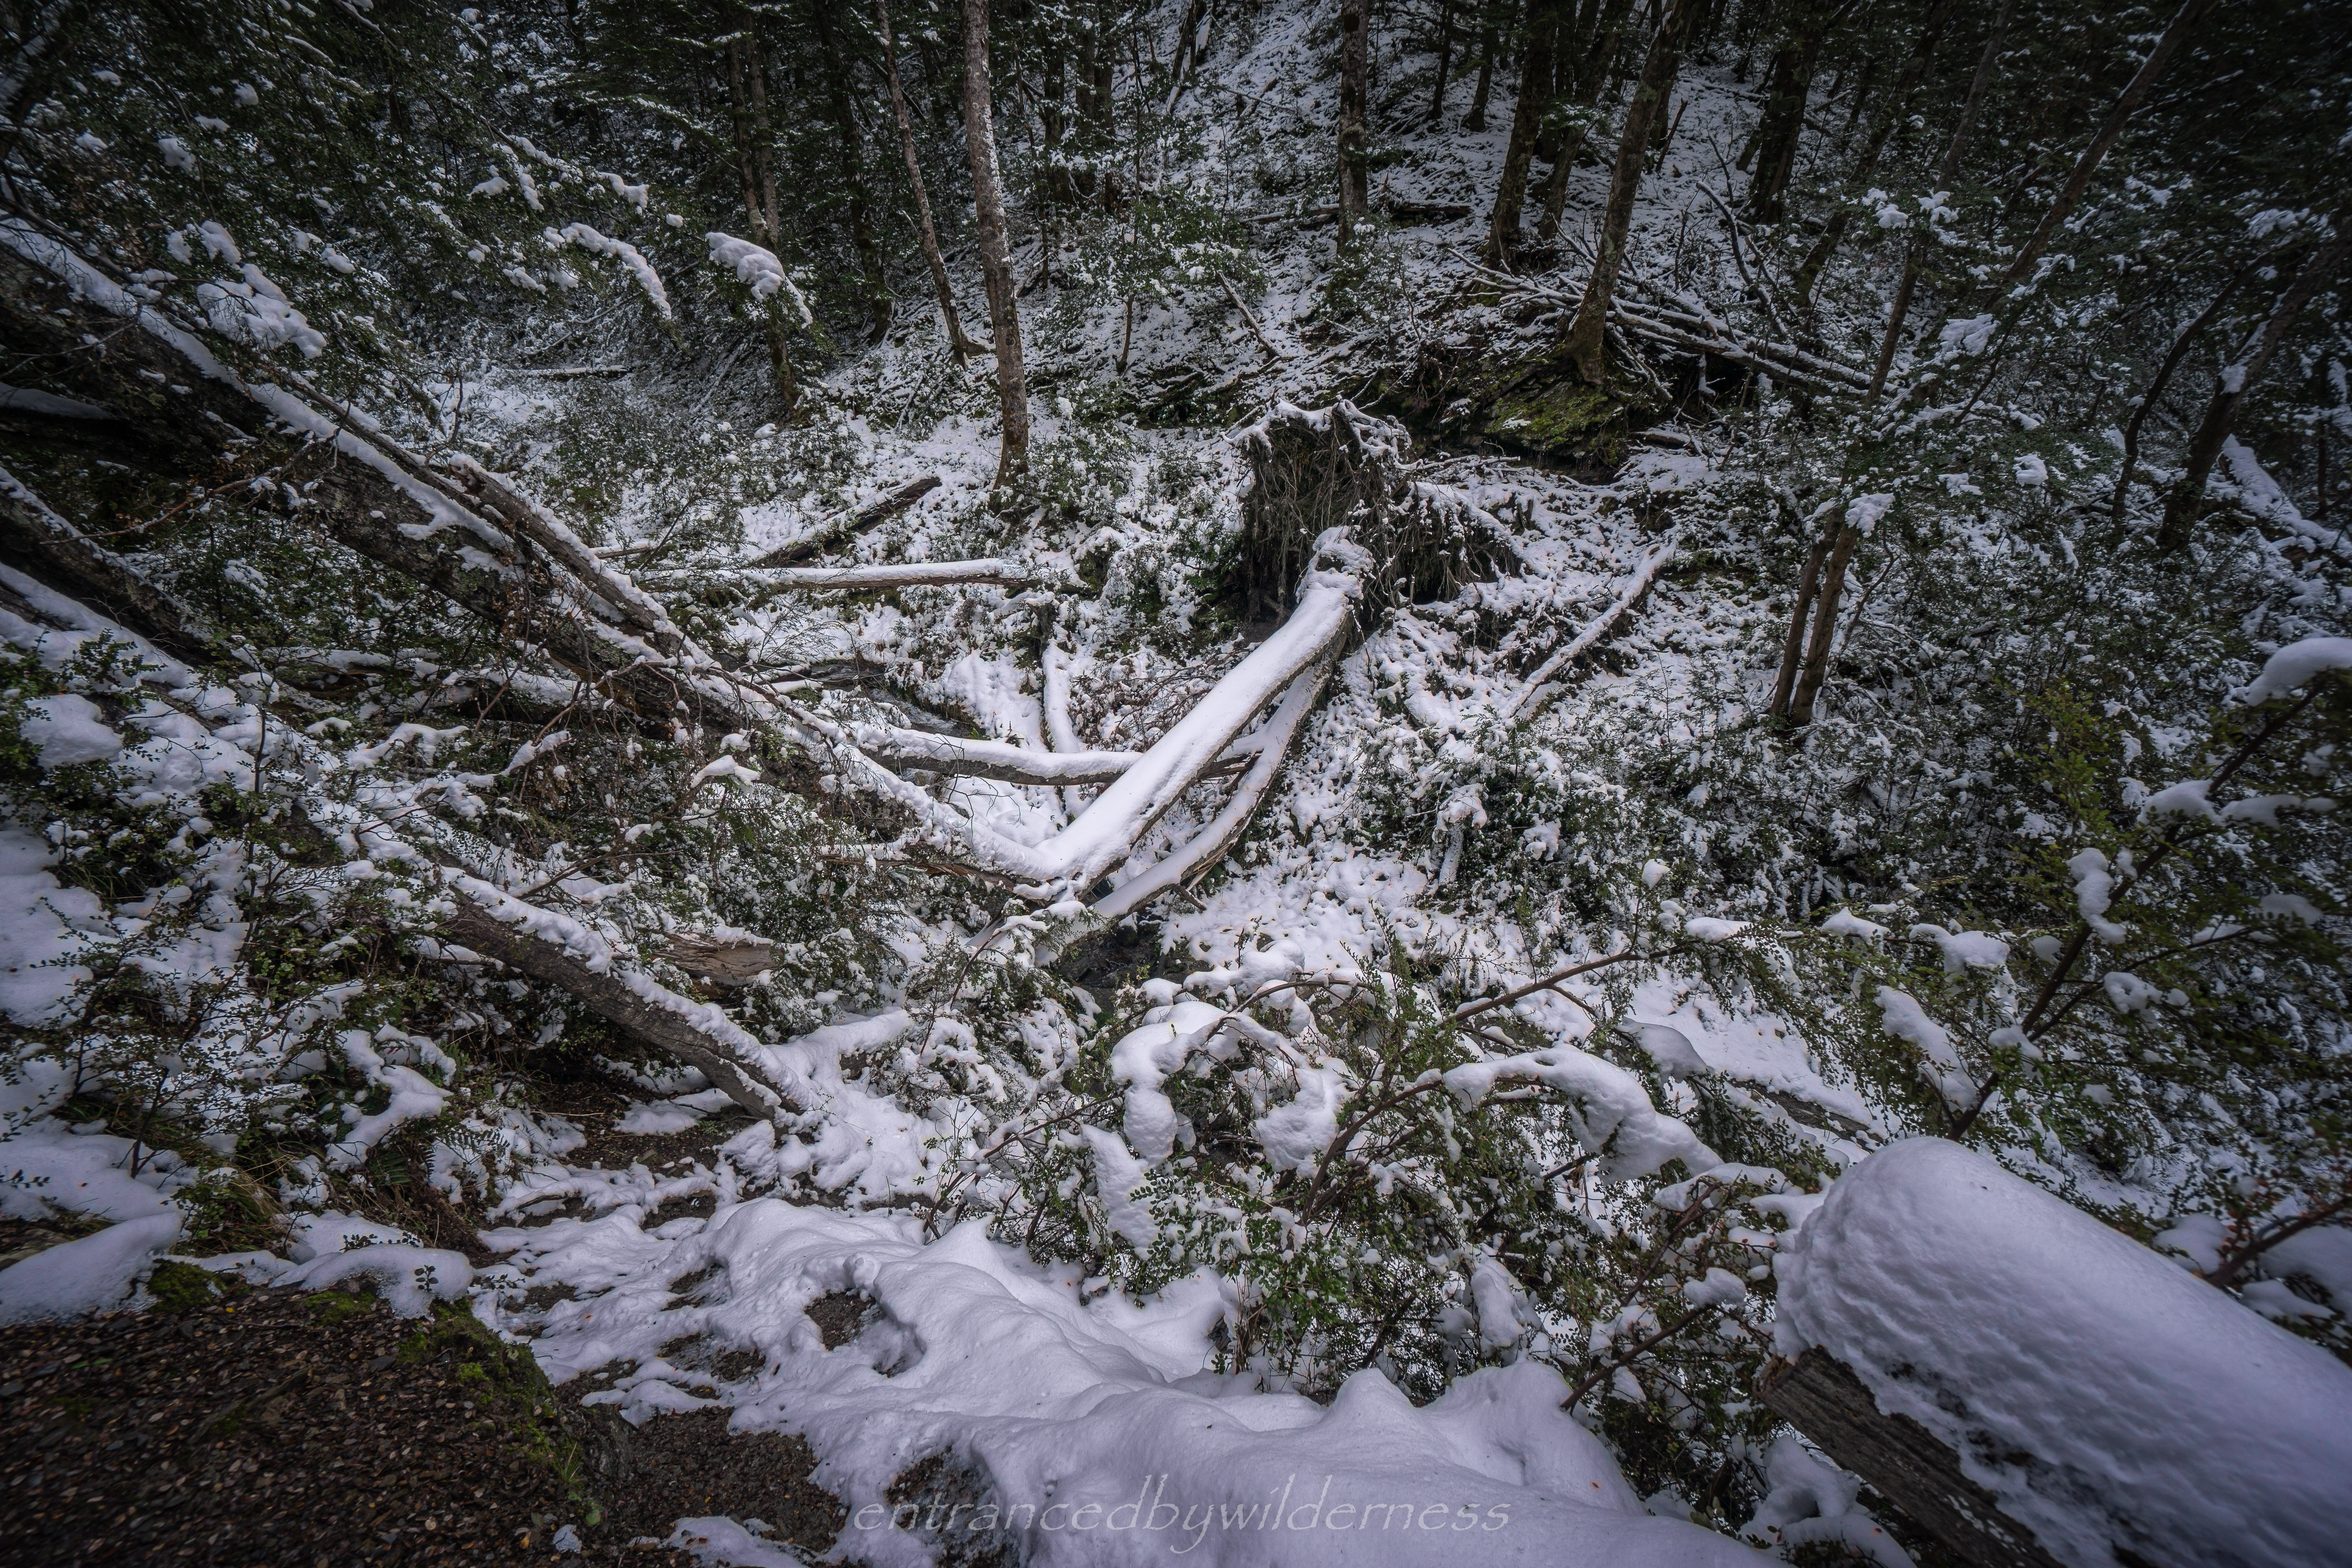 snowy gully with a fallen tree